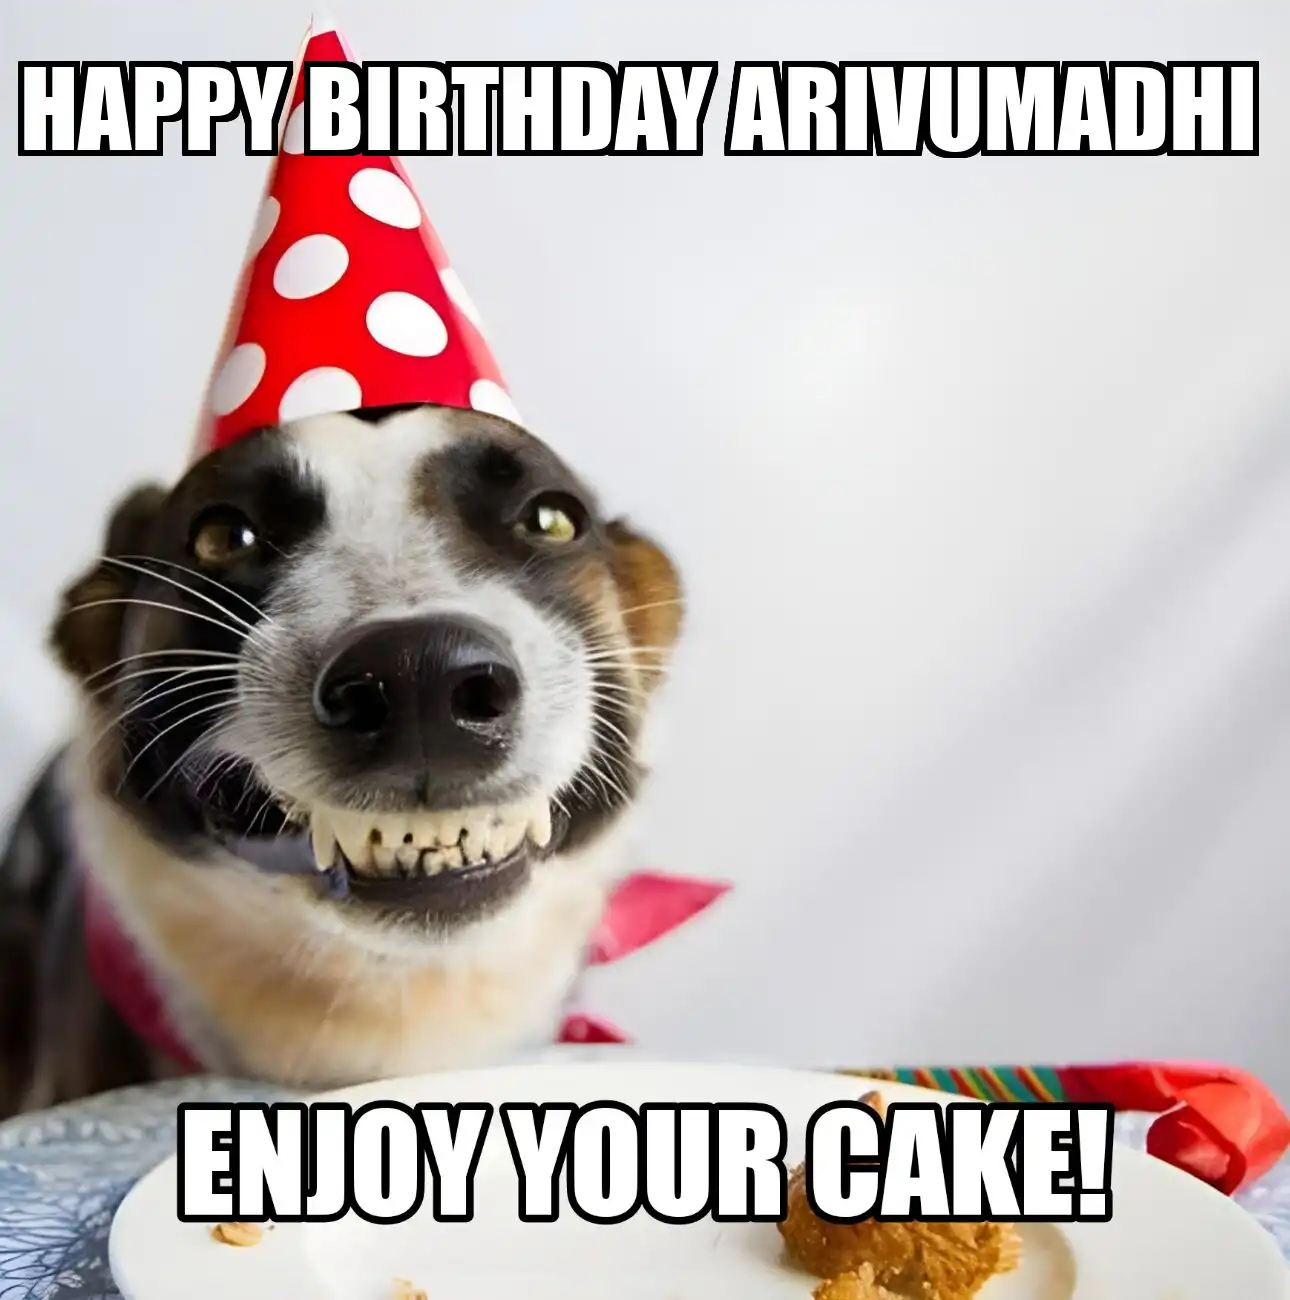 Happy Birthday Arivumadhi Enjoy Your Cake Dog Meme